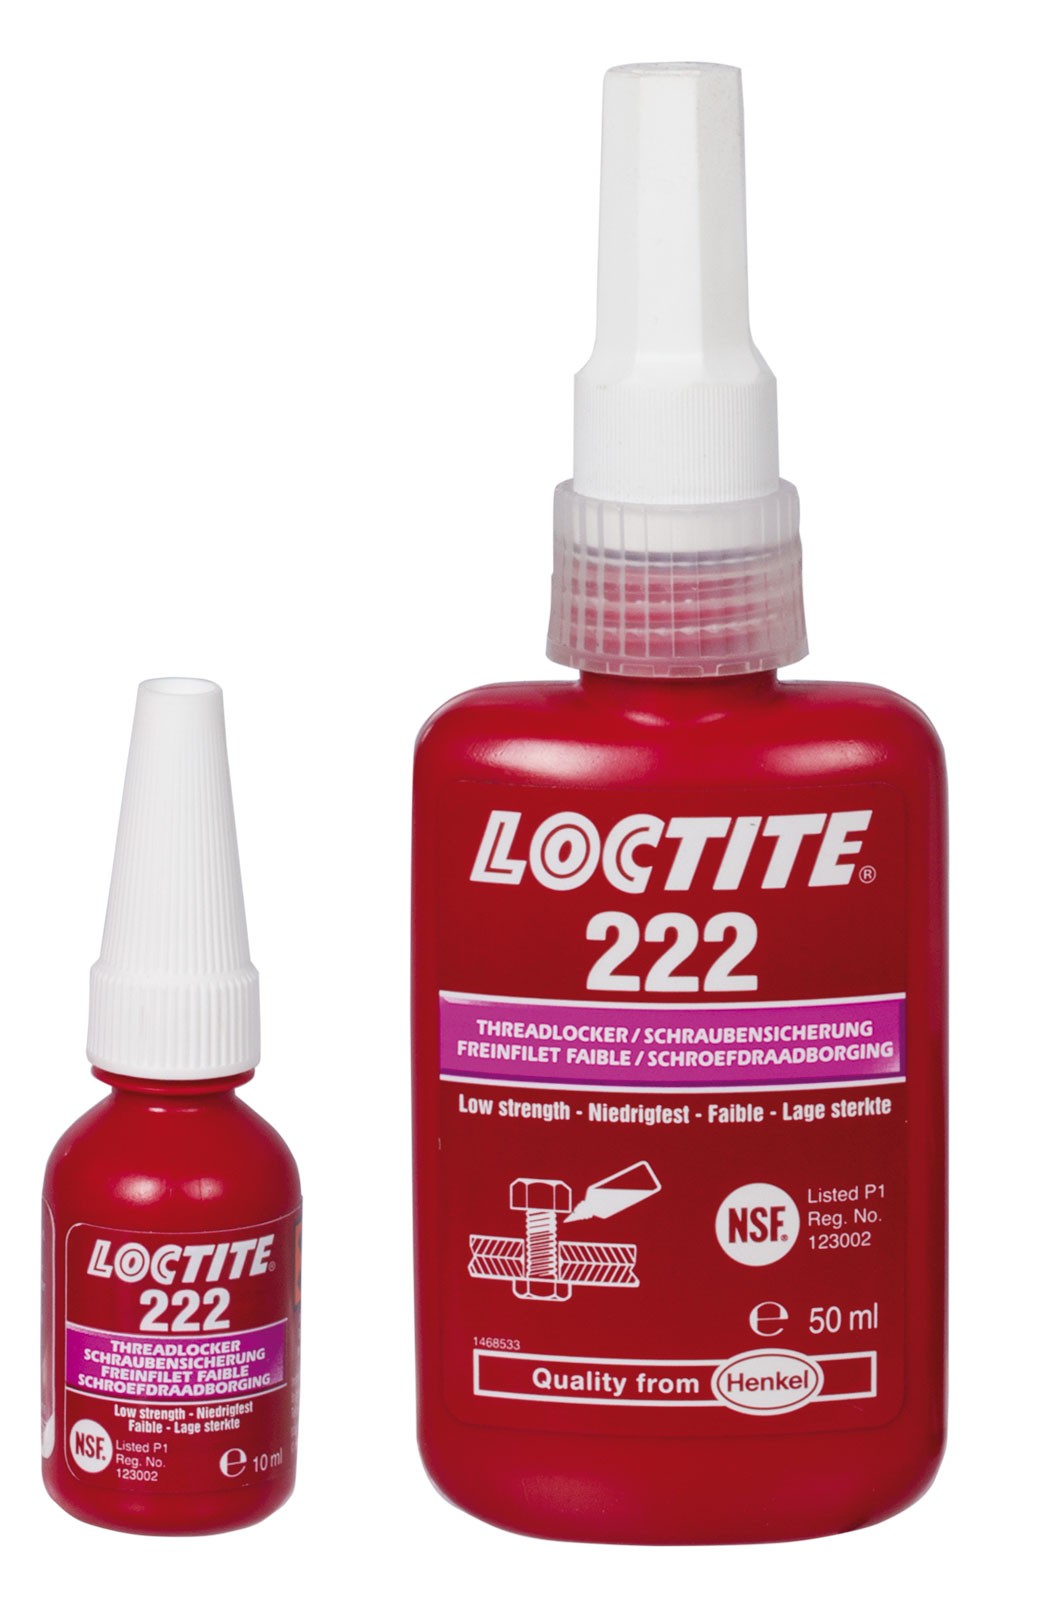 Loctite 222 Low Strength Threadlocker